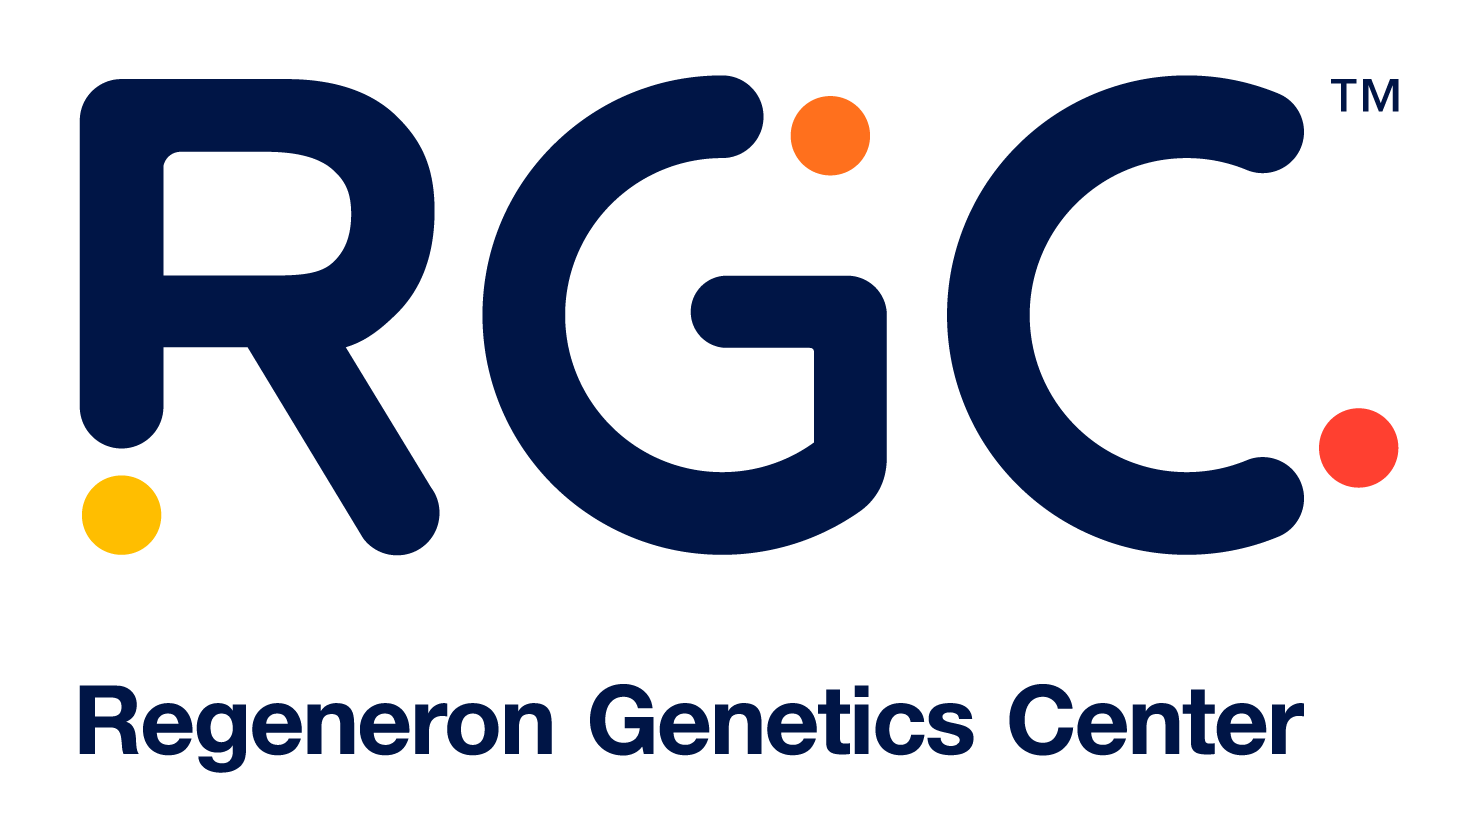 The Regeneron® Genetics Center (RGC) logo